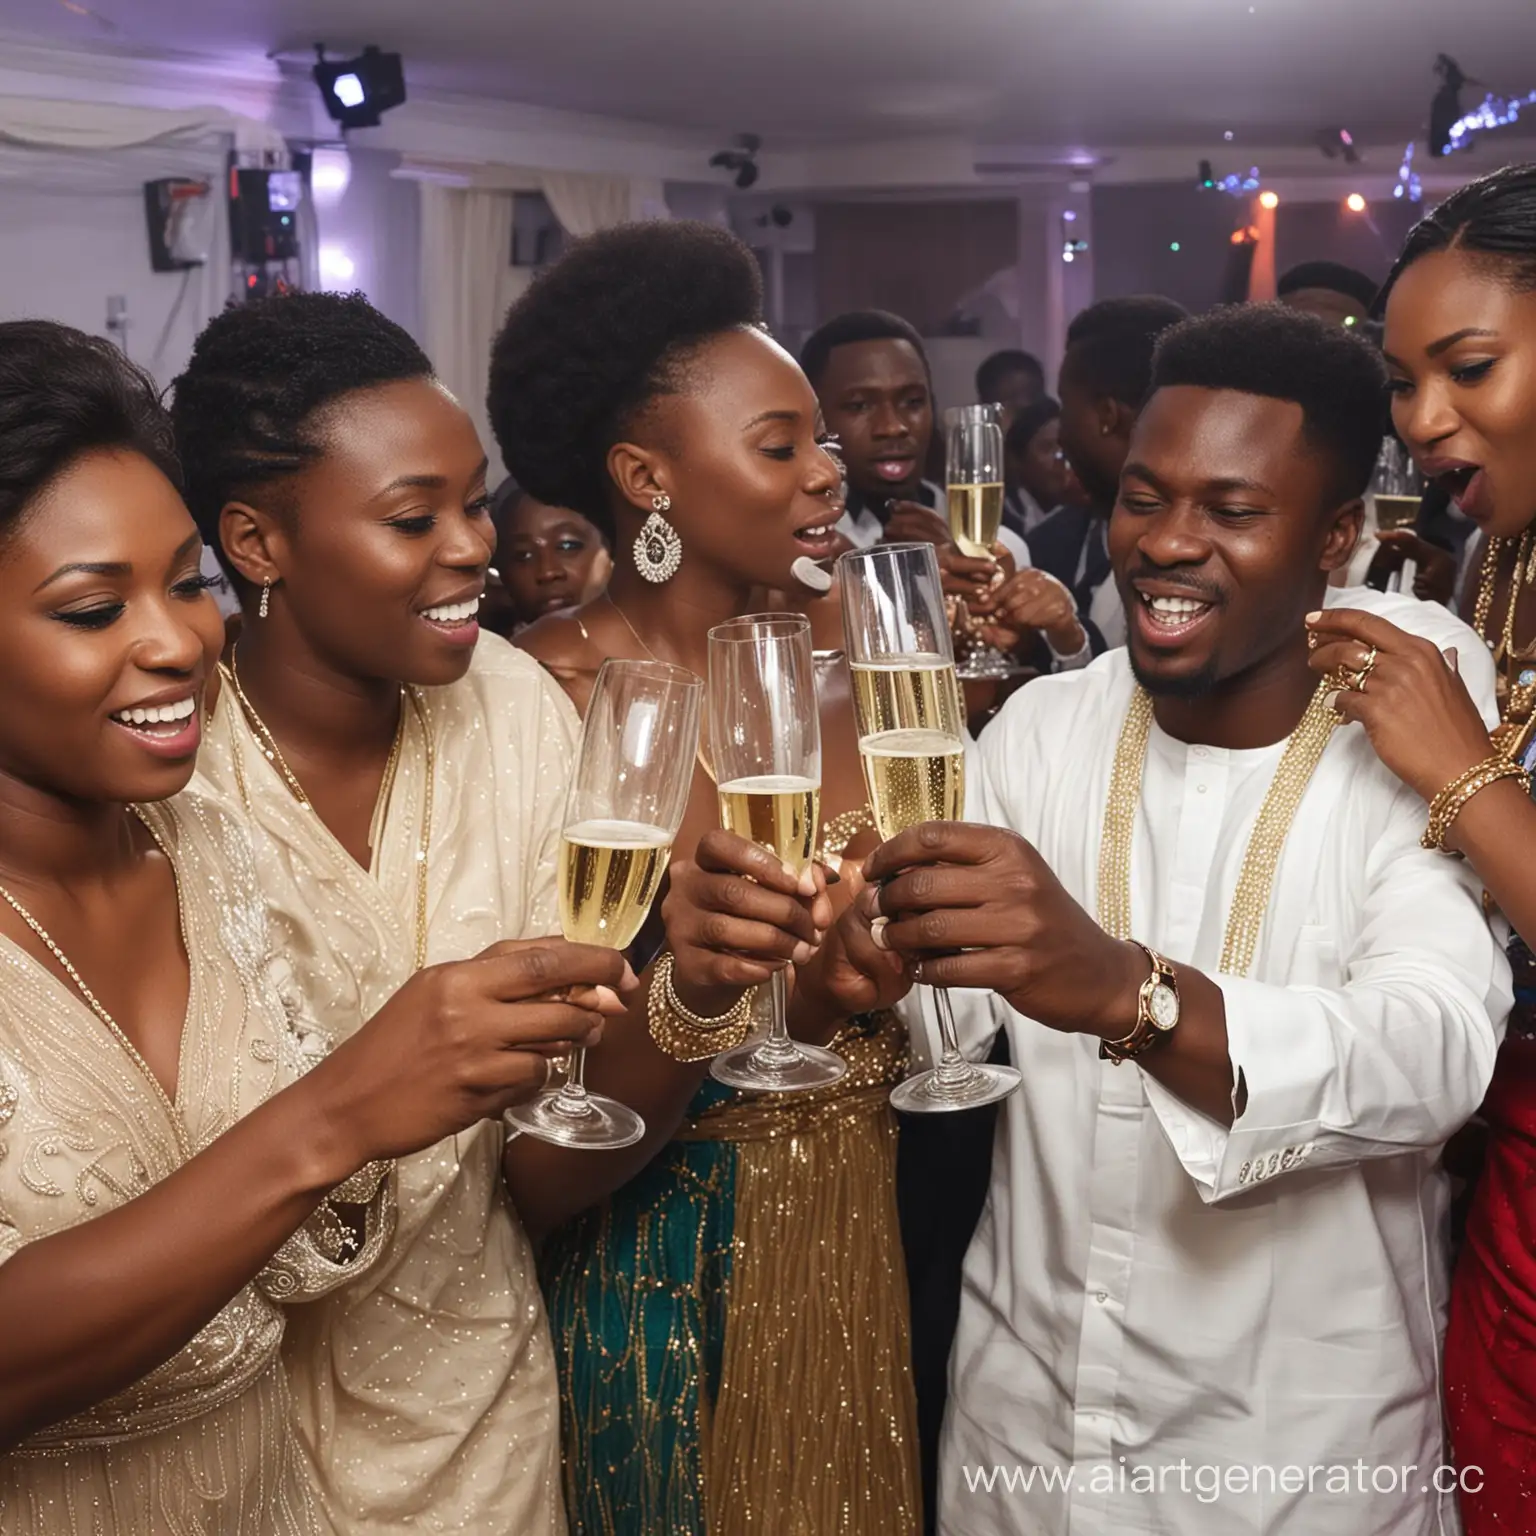 Celebratory-Scene-Nigerians-Enjoying-Champagne-at-a-Vibrant-Party